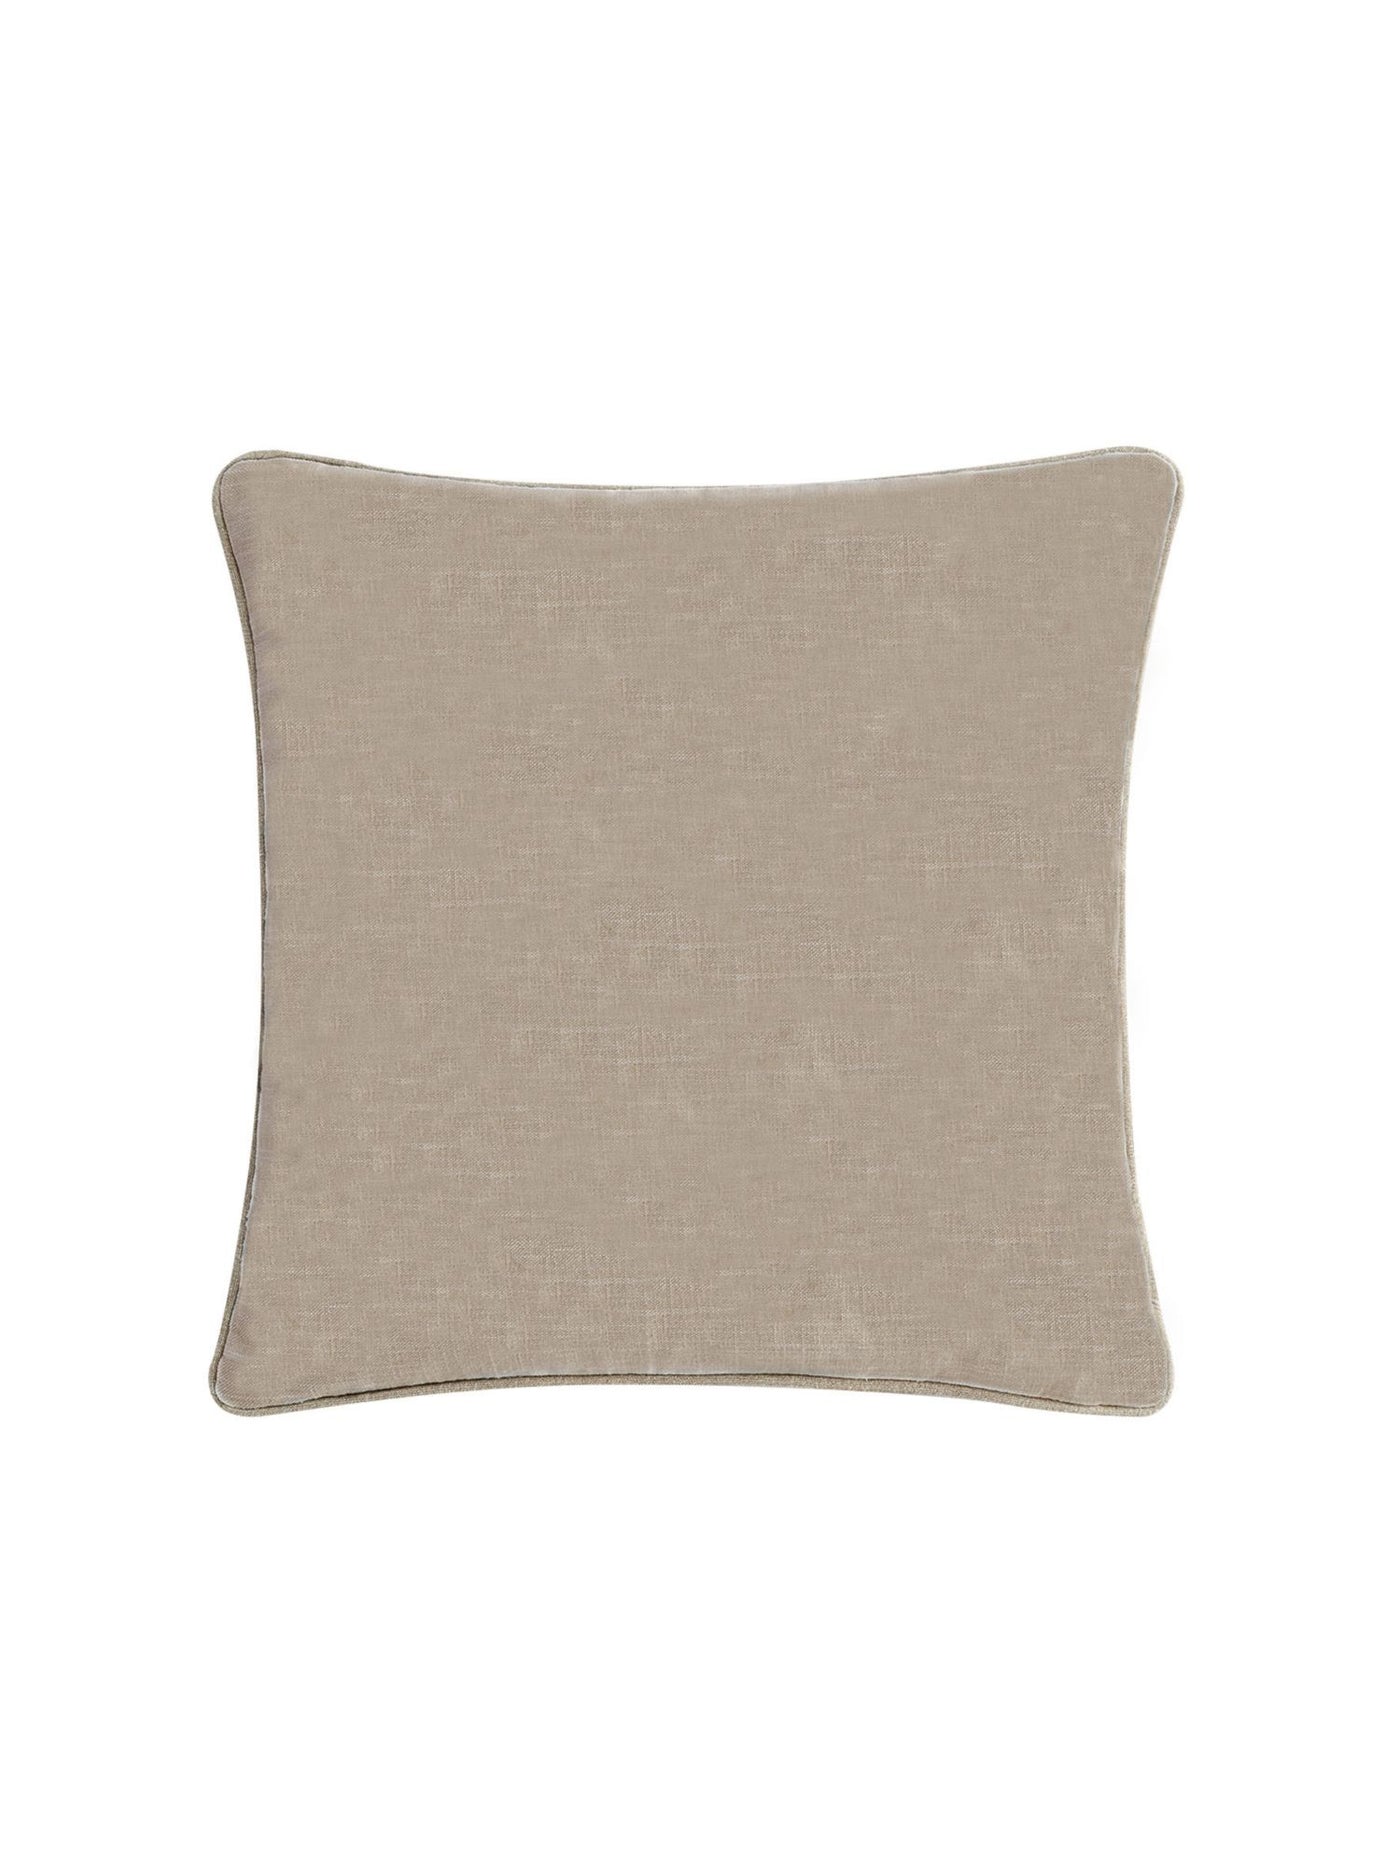 LACOURTE Beige Patterned 20 x 20 in Decorative Pillow